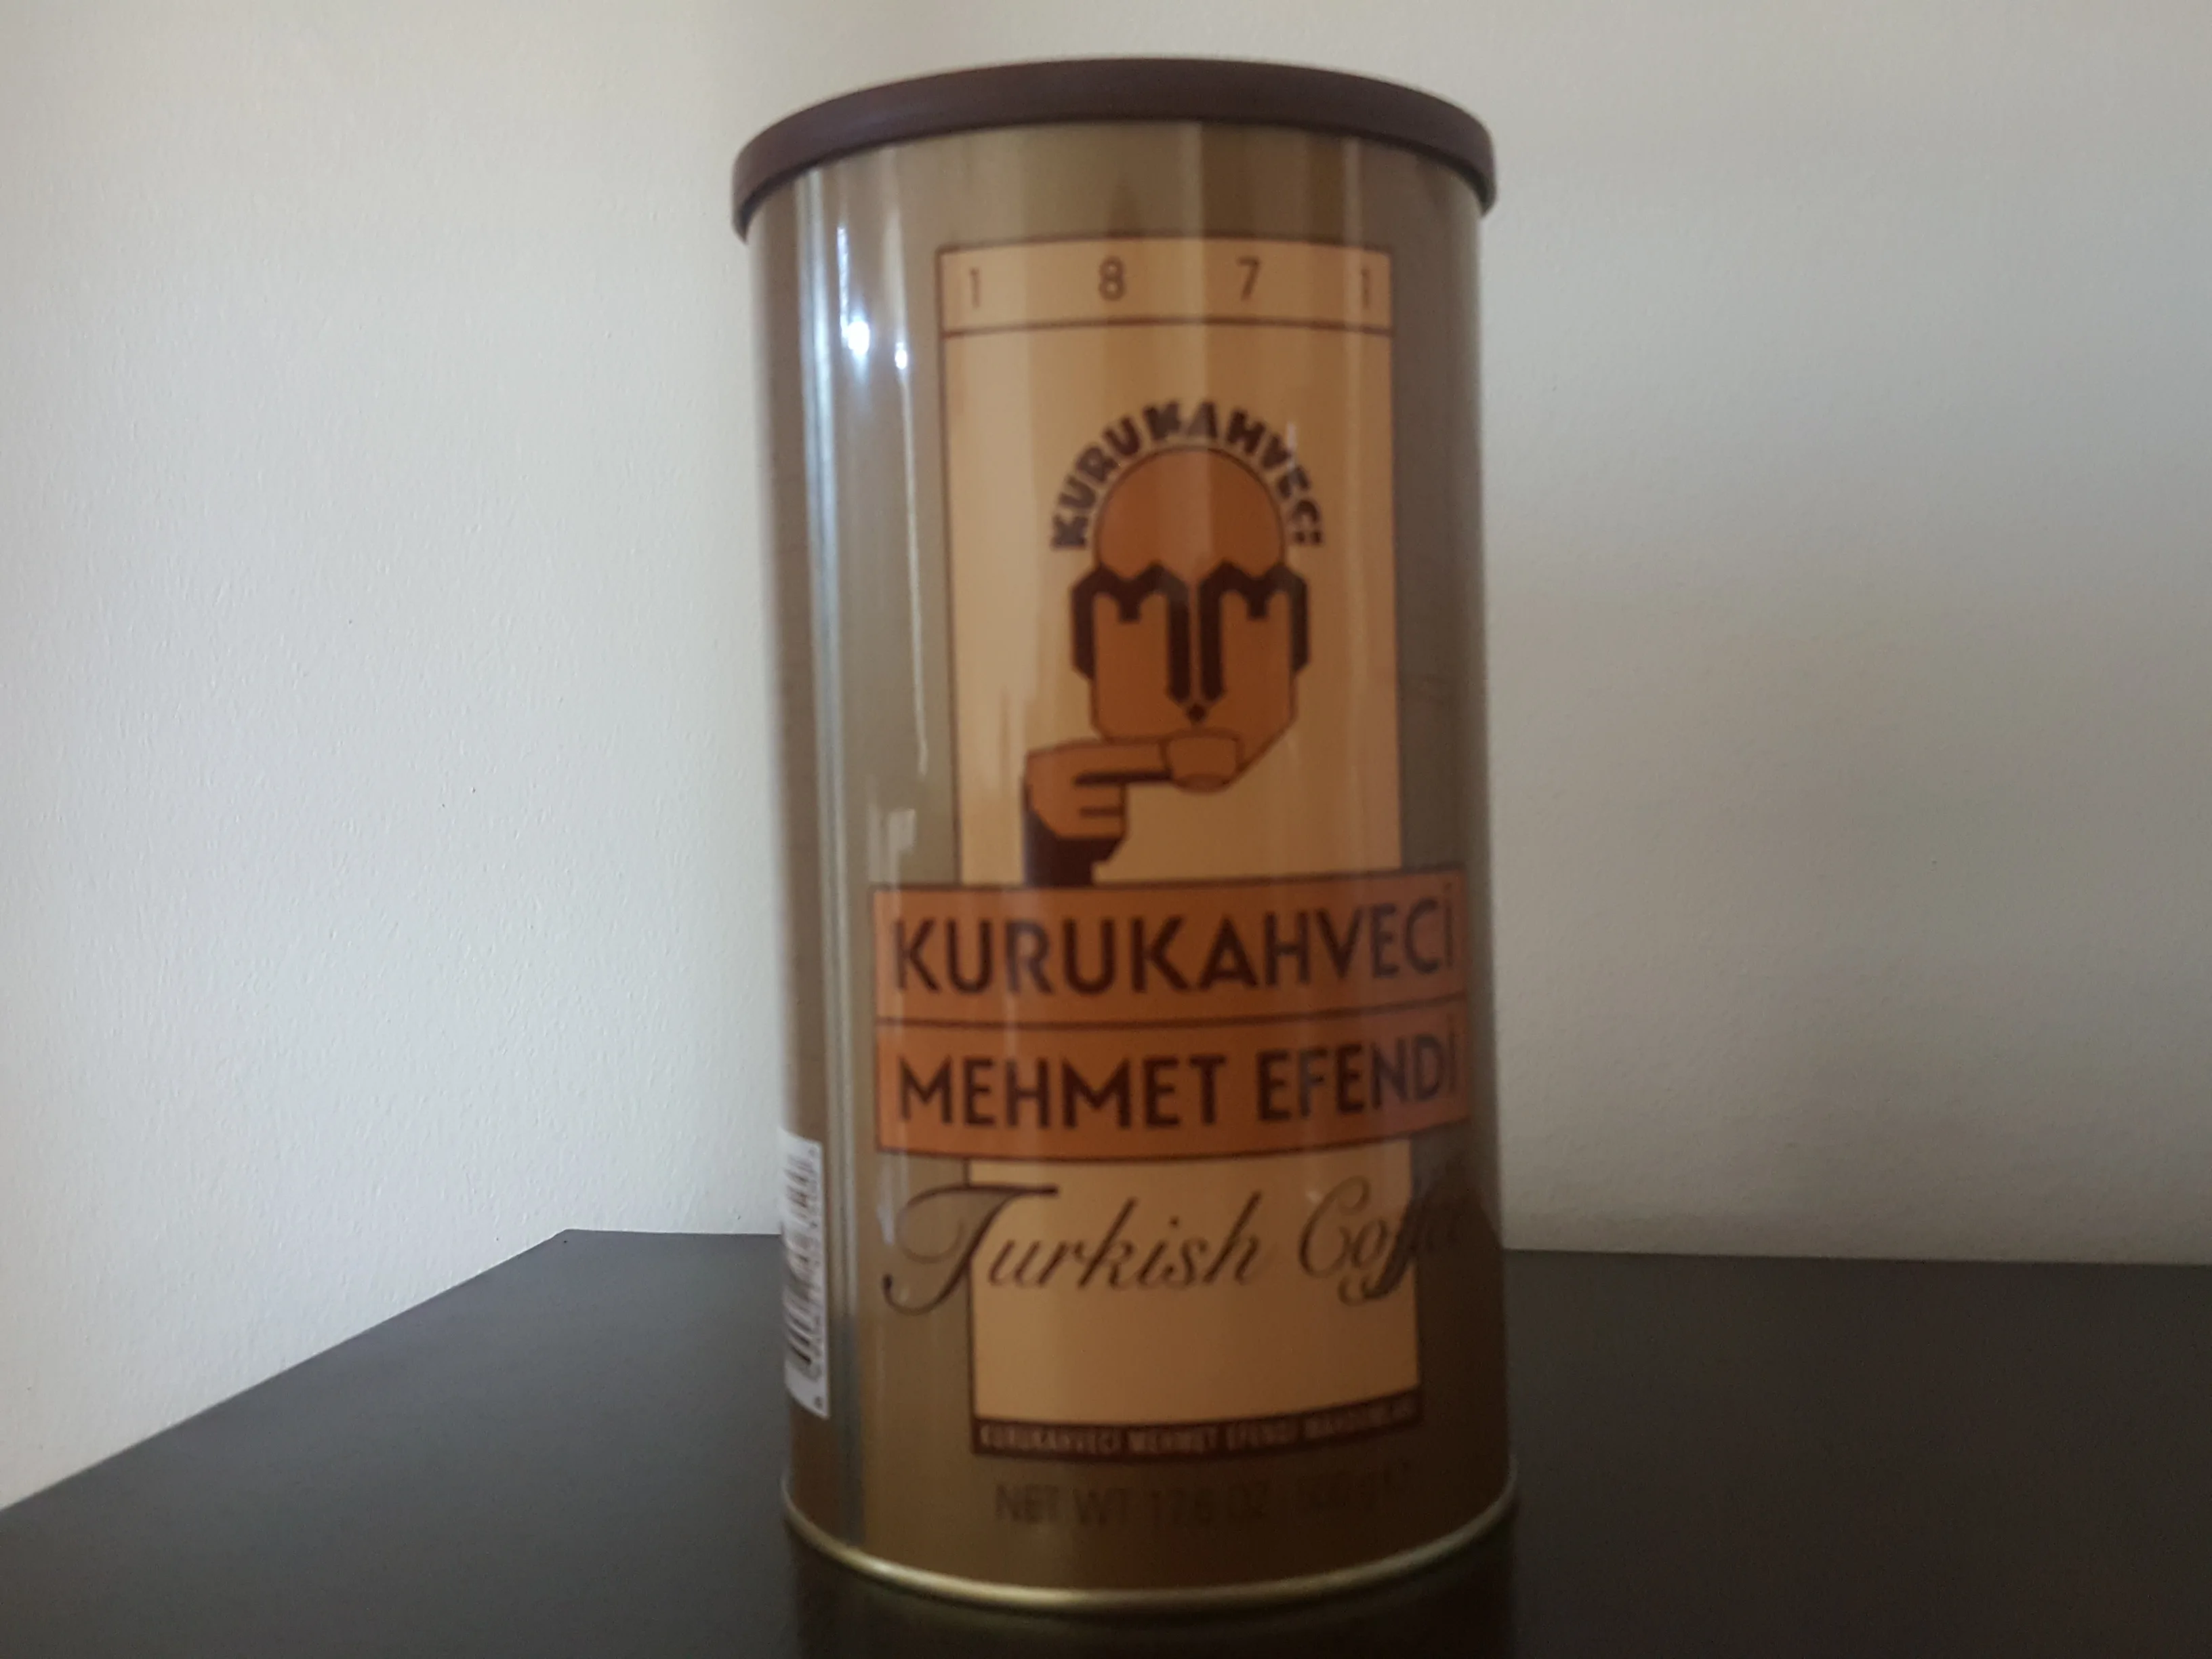 

turkish coffe Kurukahveci Mehmet Efendi 500 gr, 100 gr Freshly Ground Turkish Coffee Arabice Type